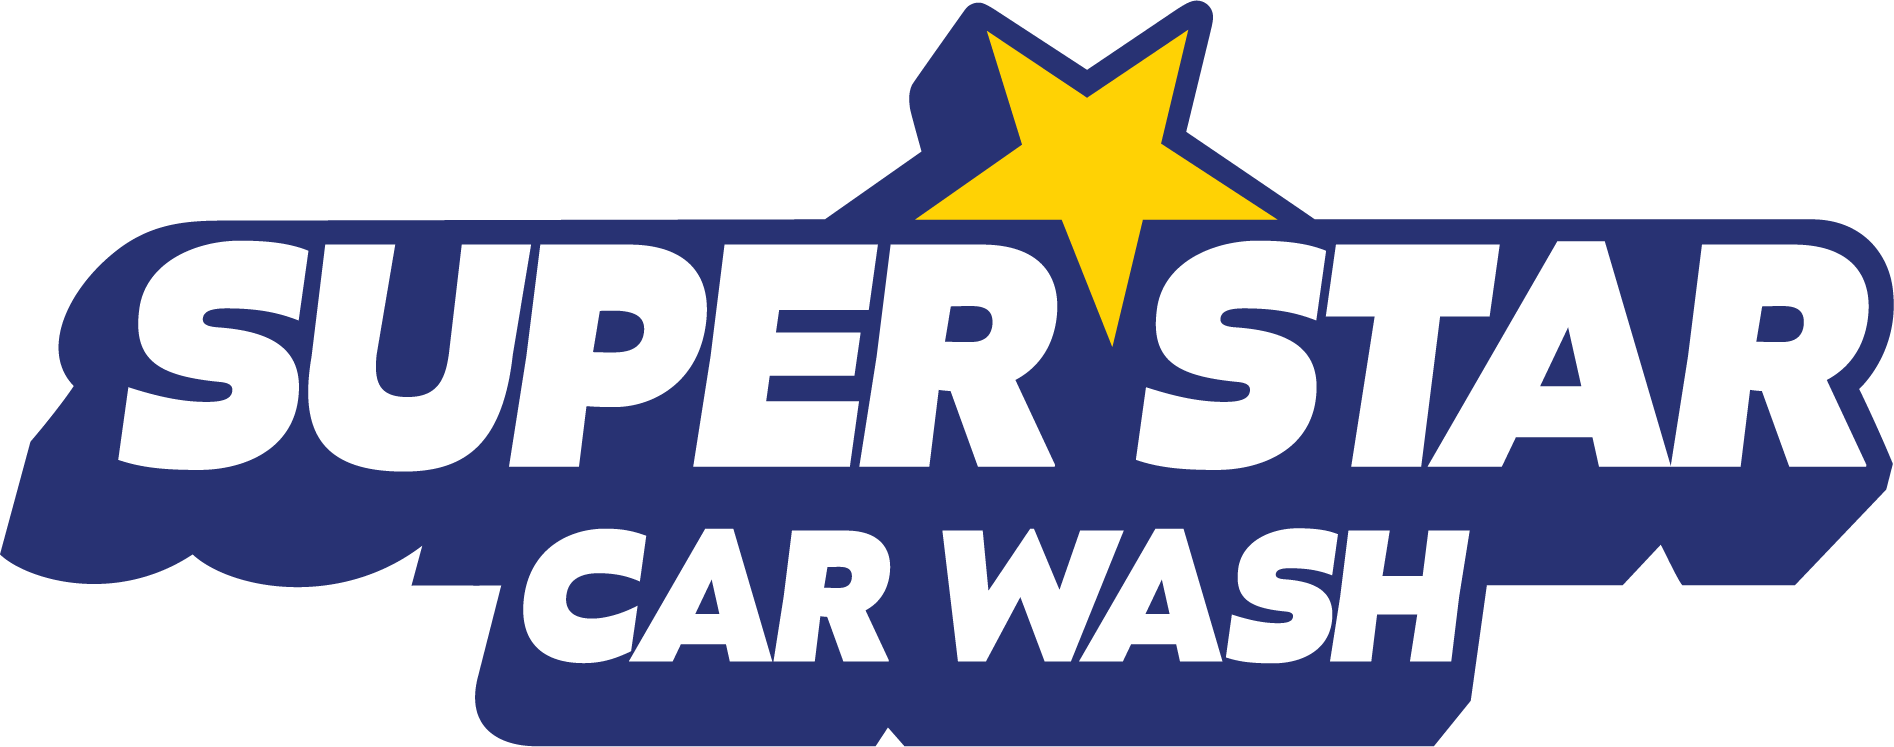 Super Star Car Wash Franchise Competetive Data